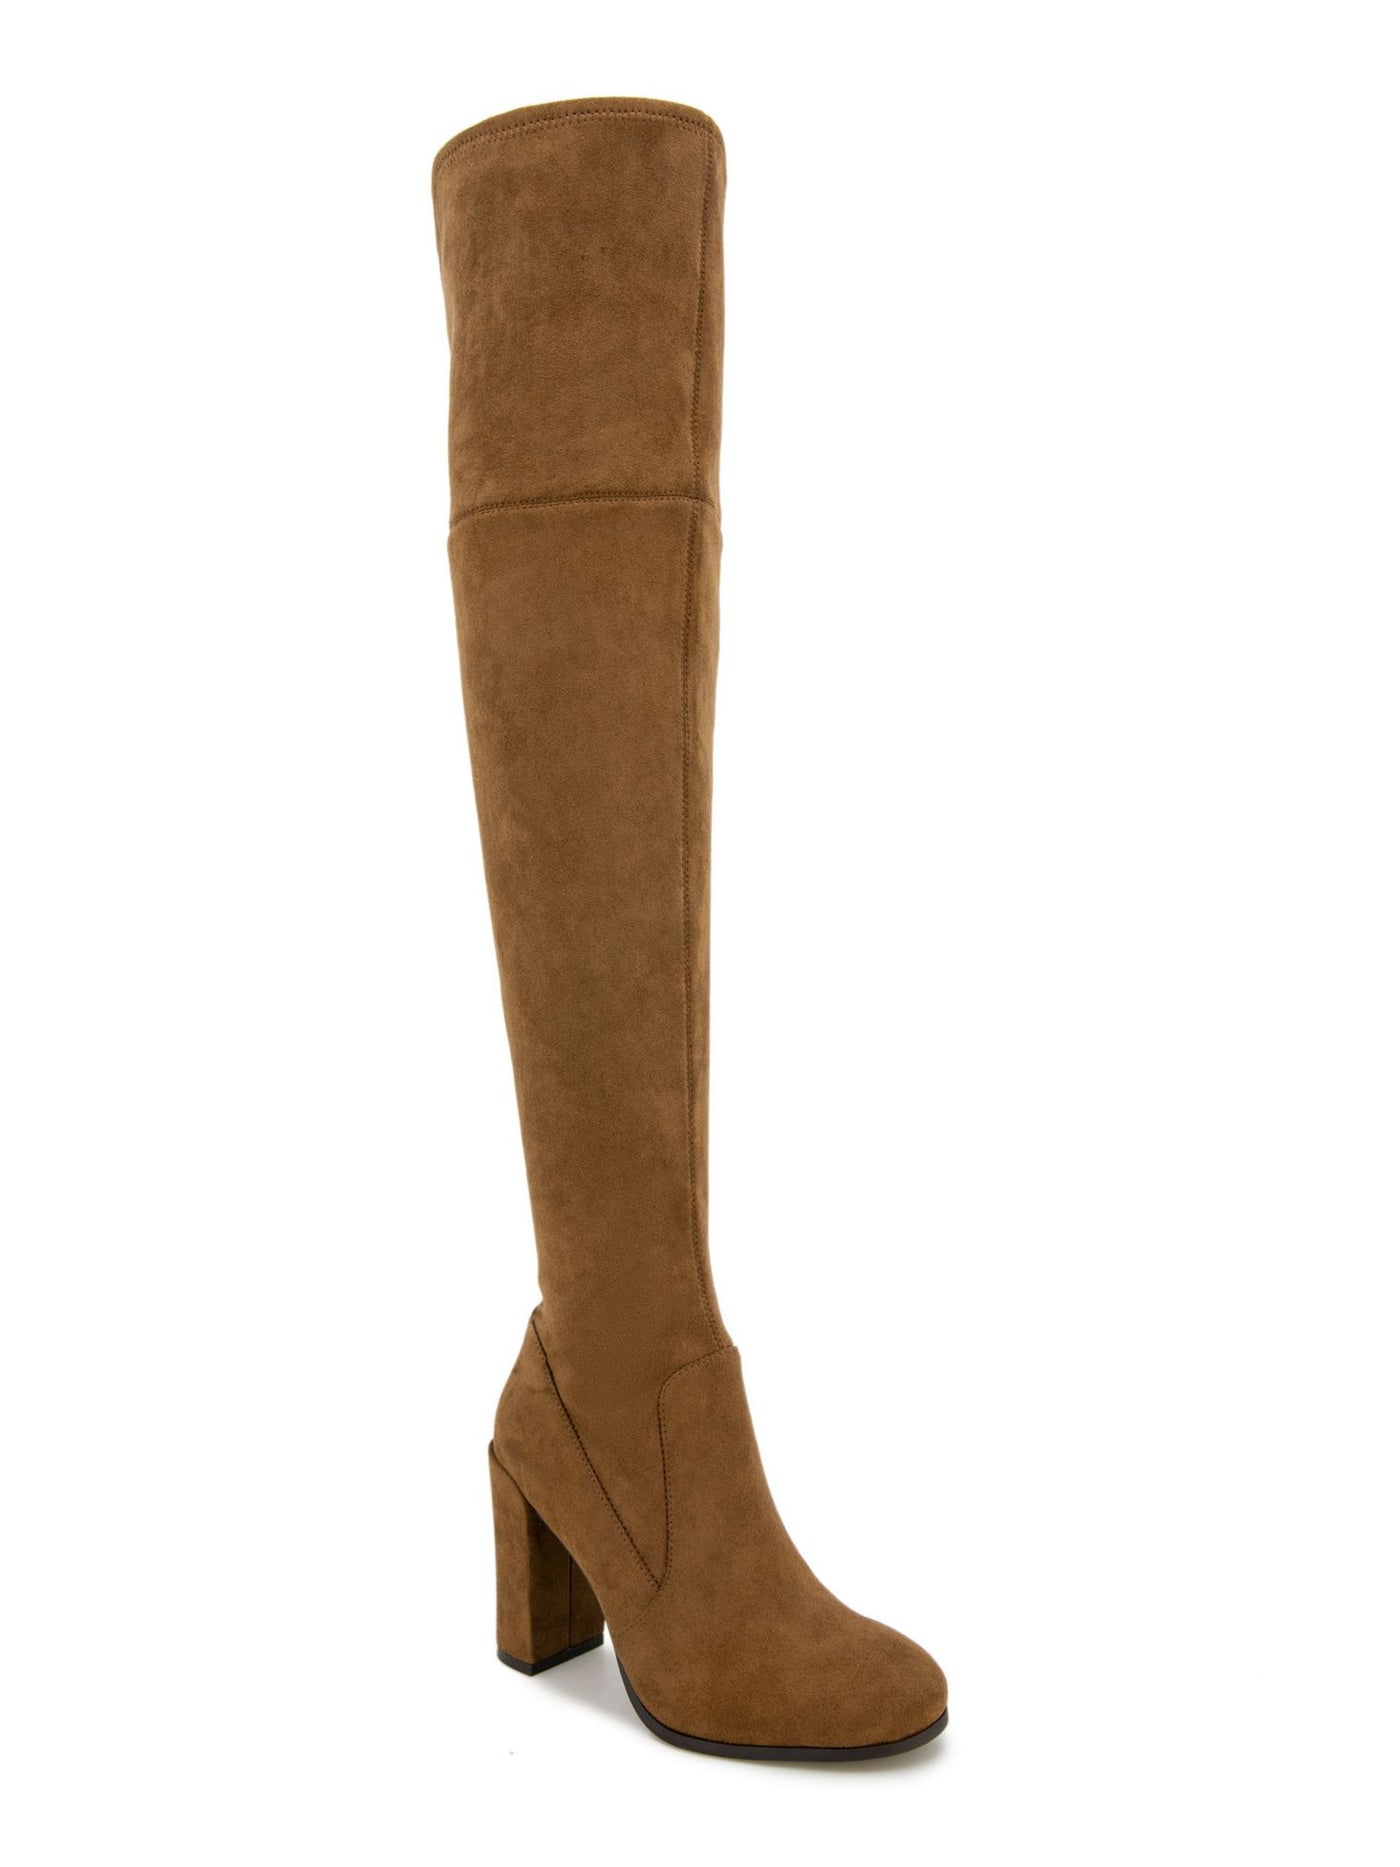 KENNETH COLE NEW YORK Womens Brown Inside Half Zip Justin Round Toe Block Heel Dress Boots 5 M